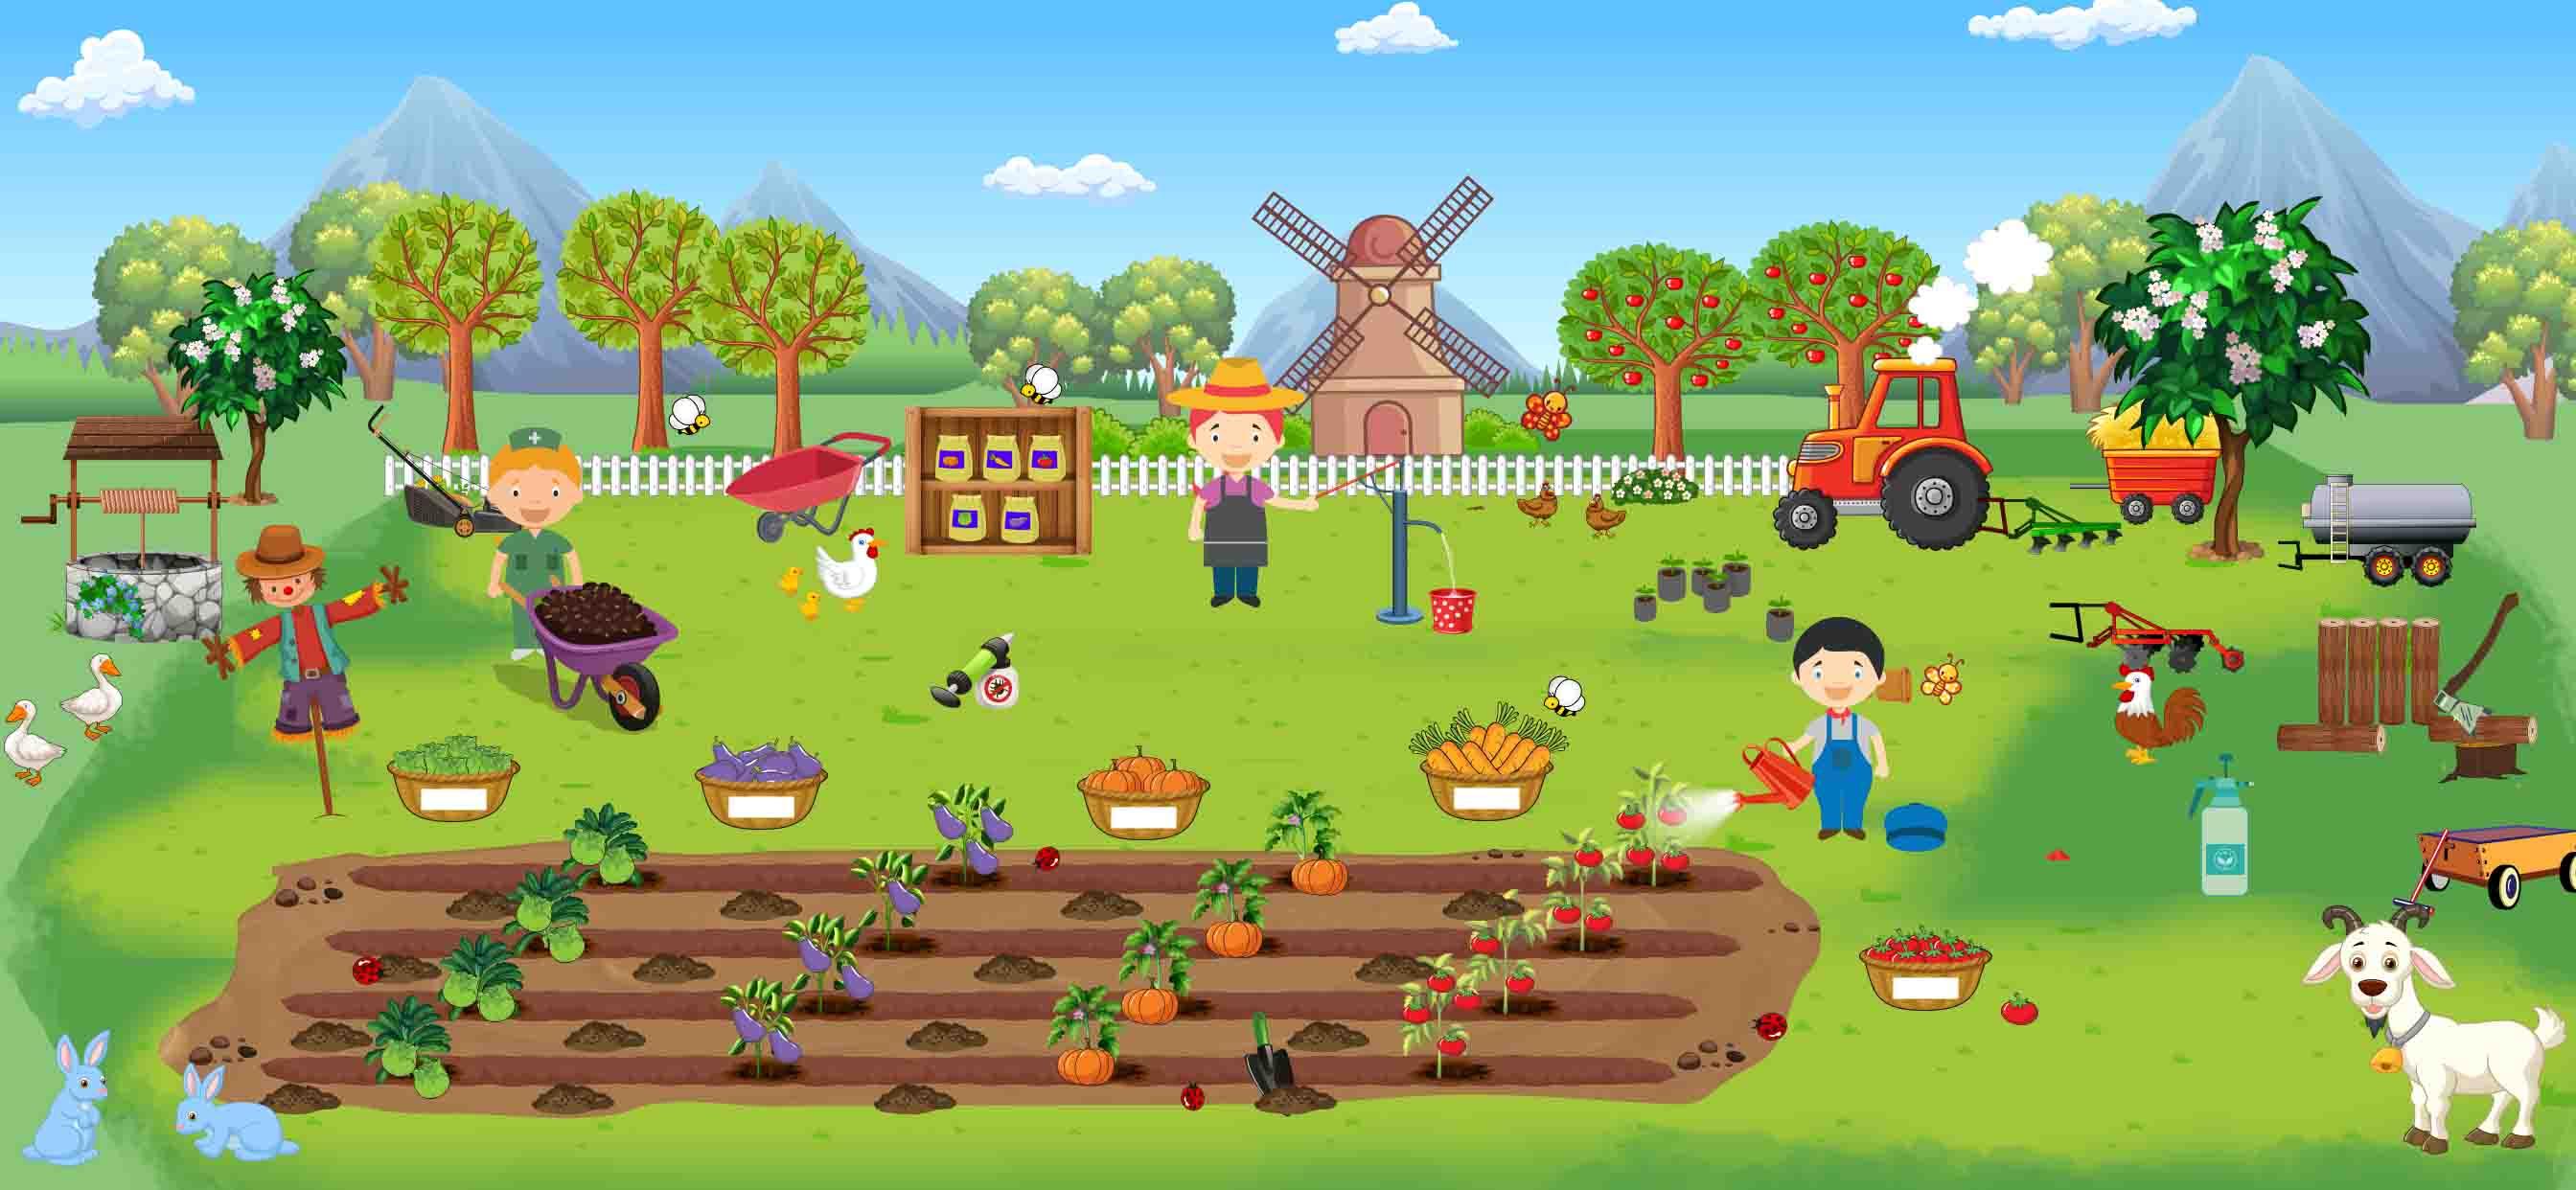 Pretend Town Farm House: Explore Farming World 1.1 Screenshot 1